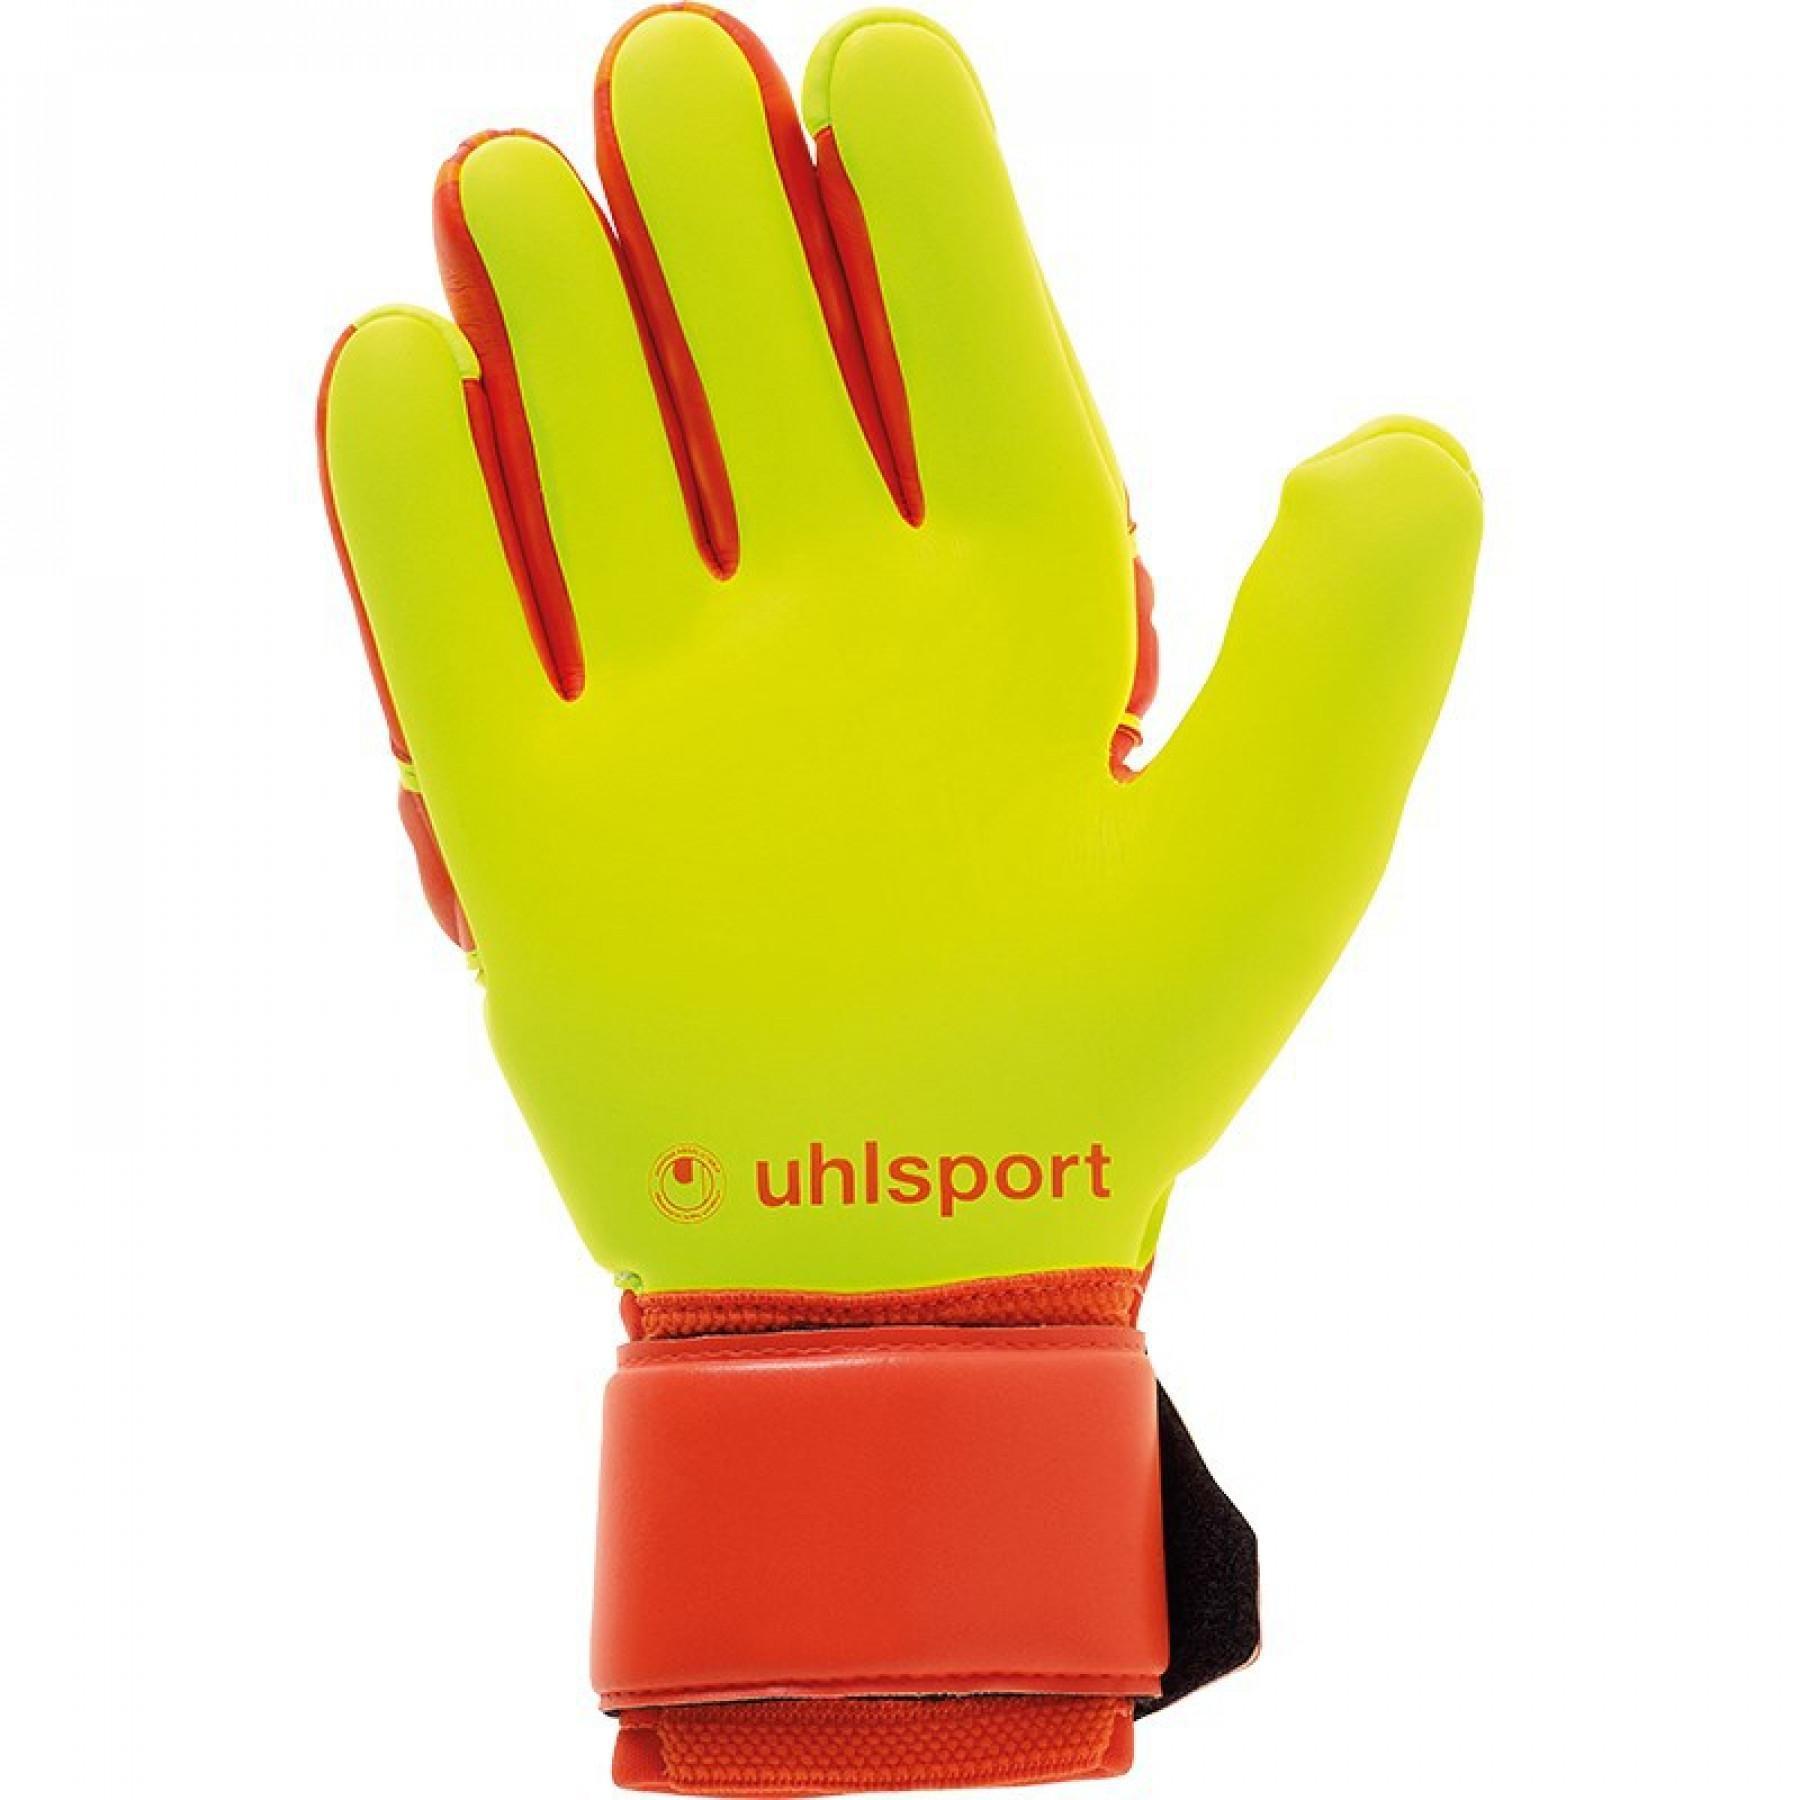 Goalkeeper gloves Uhlsport Dynamic Impulse Absolutgrip Reflex